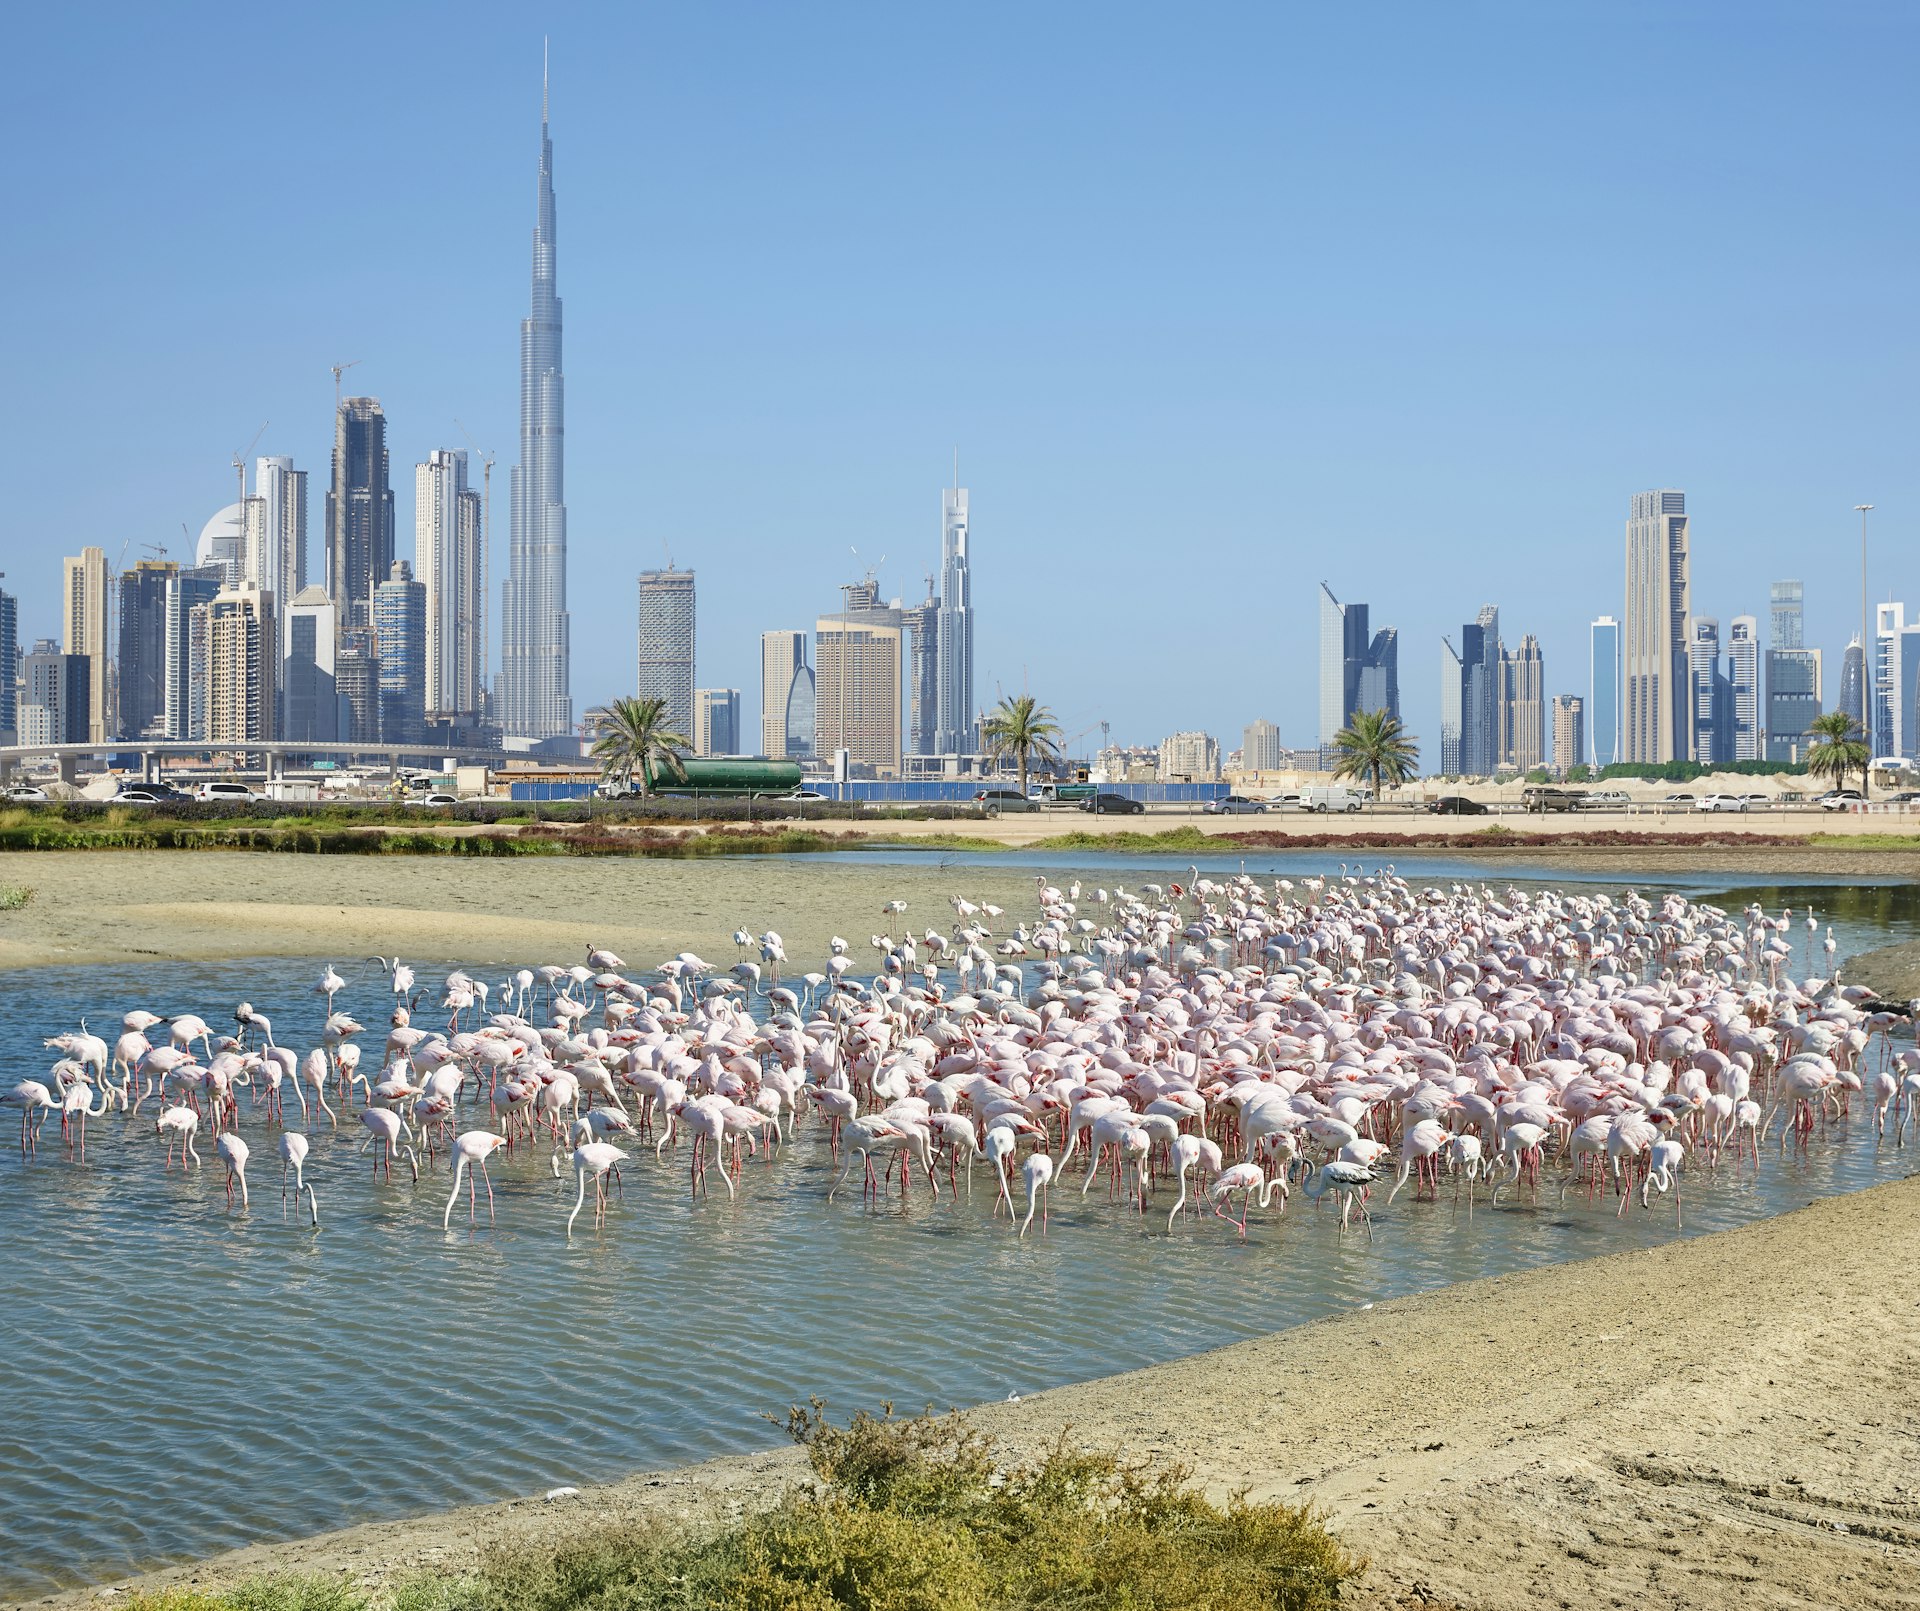 Flamingoes perch in the water at Ras Al Khor Wildlife Sanctuary in Dubai, United Arab Emirates